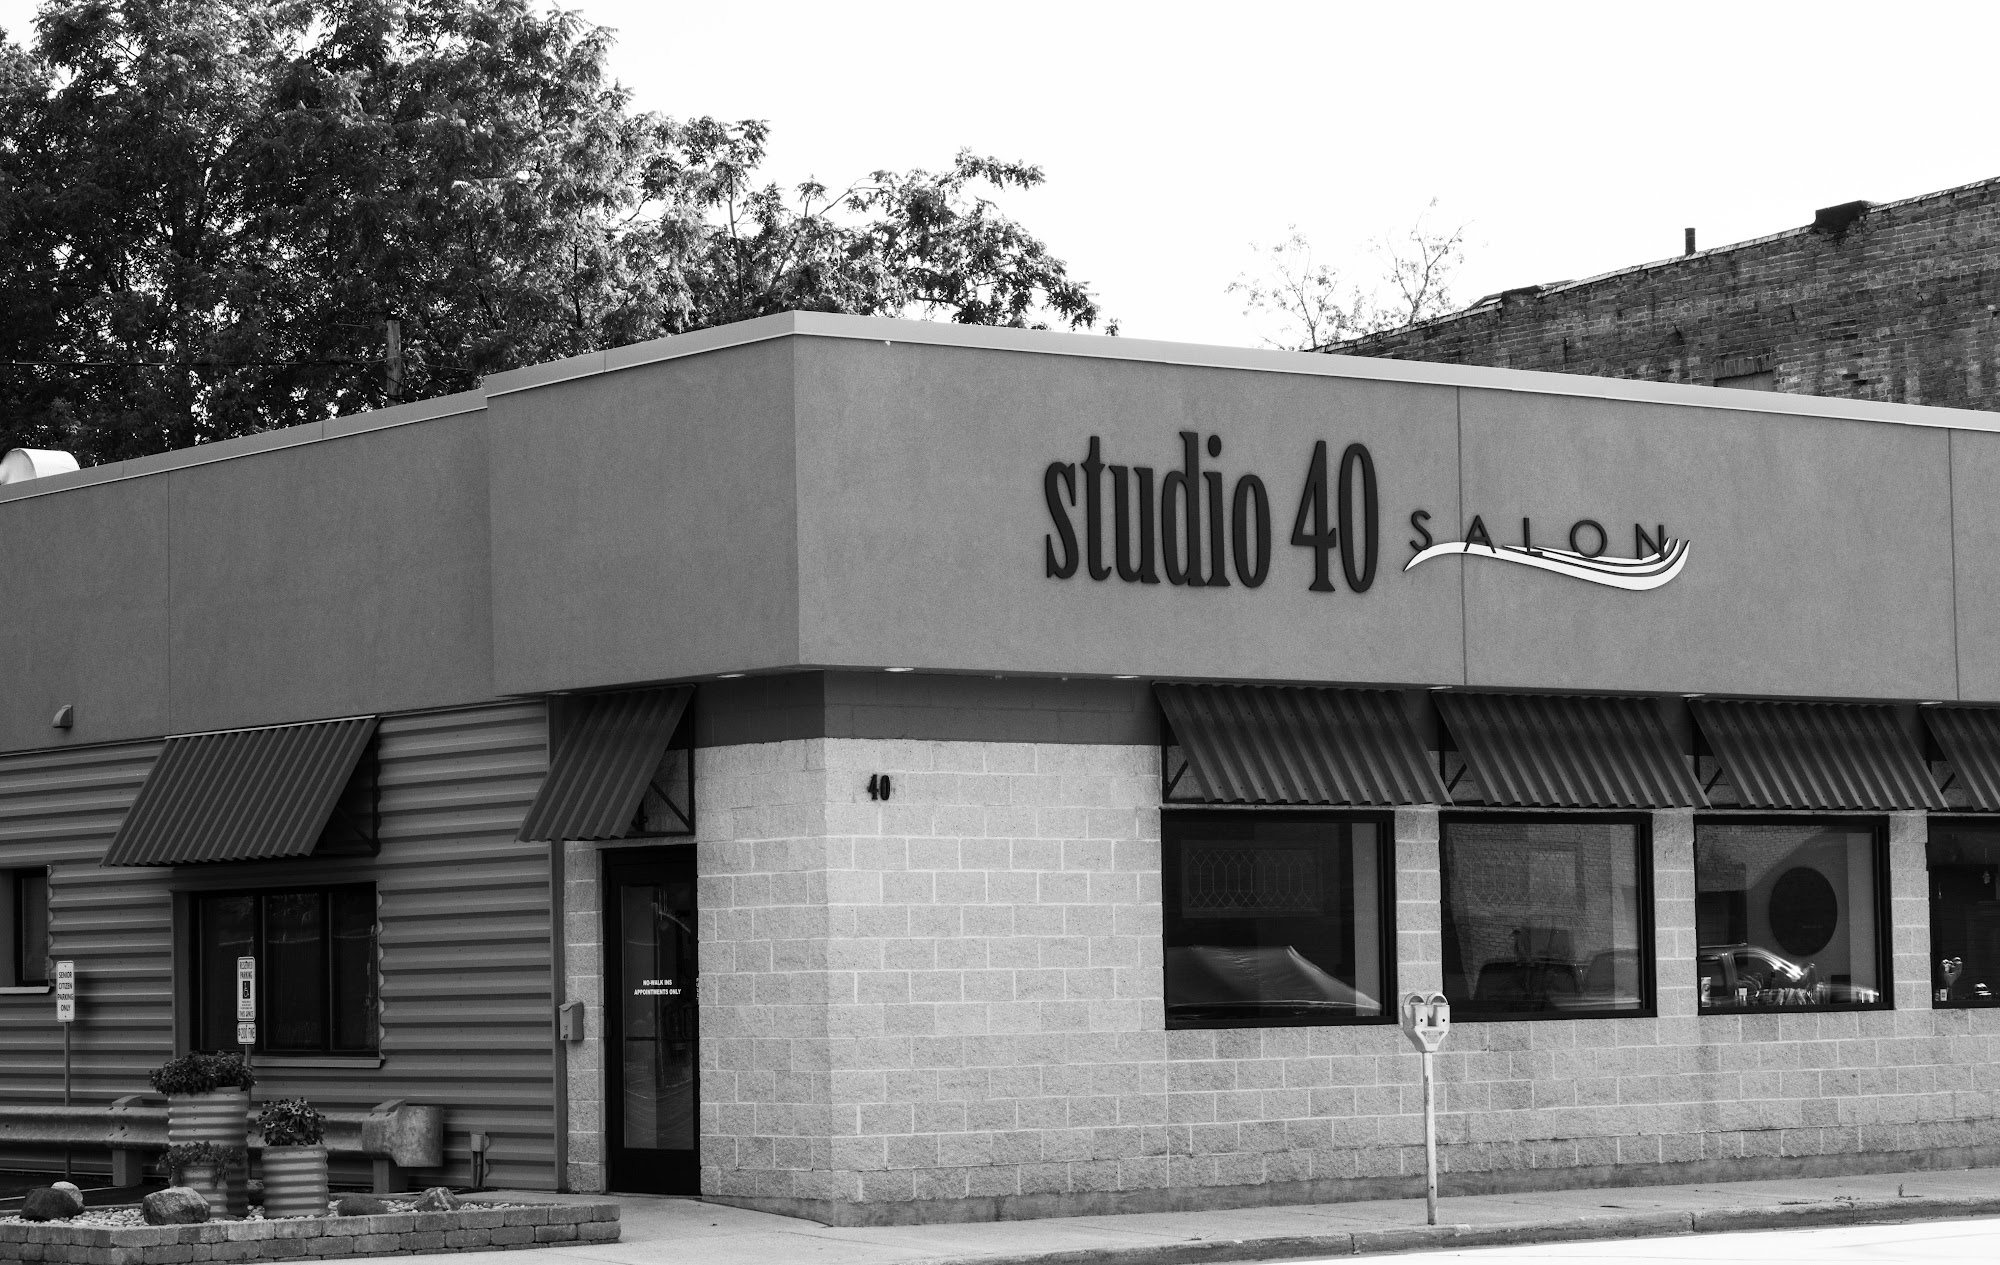 Studio 40 Salon